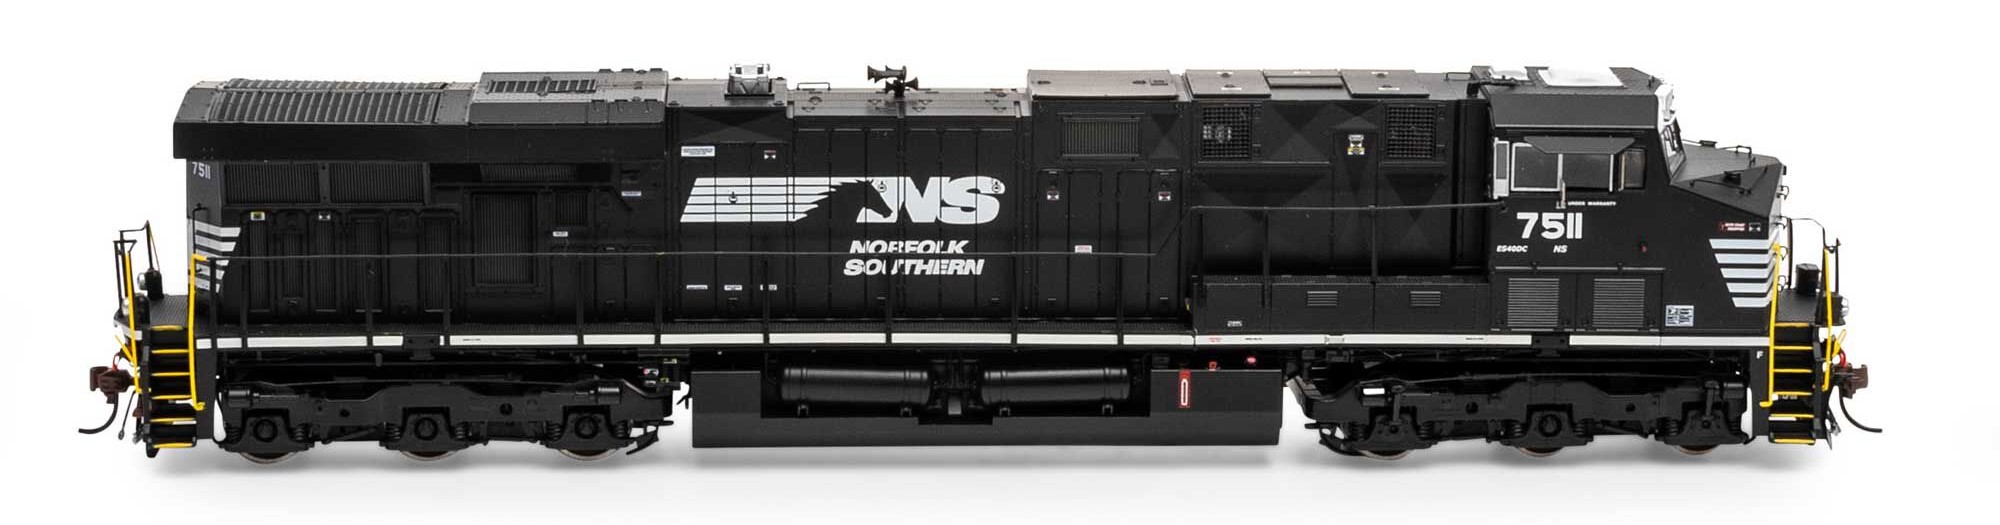 Athearn Genesis HO ATHG83095 DCC Ready ES44DC Locomotive Norfolk Southern NS #7511